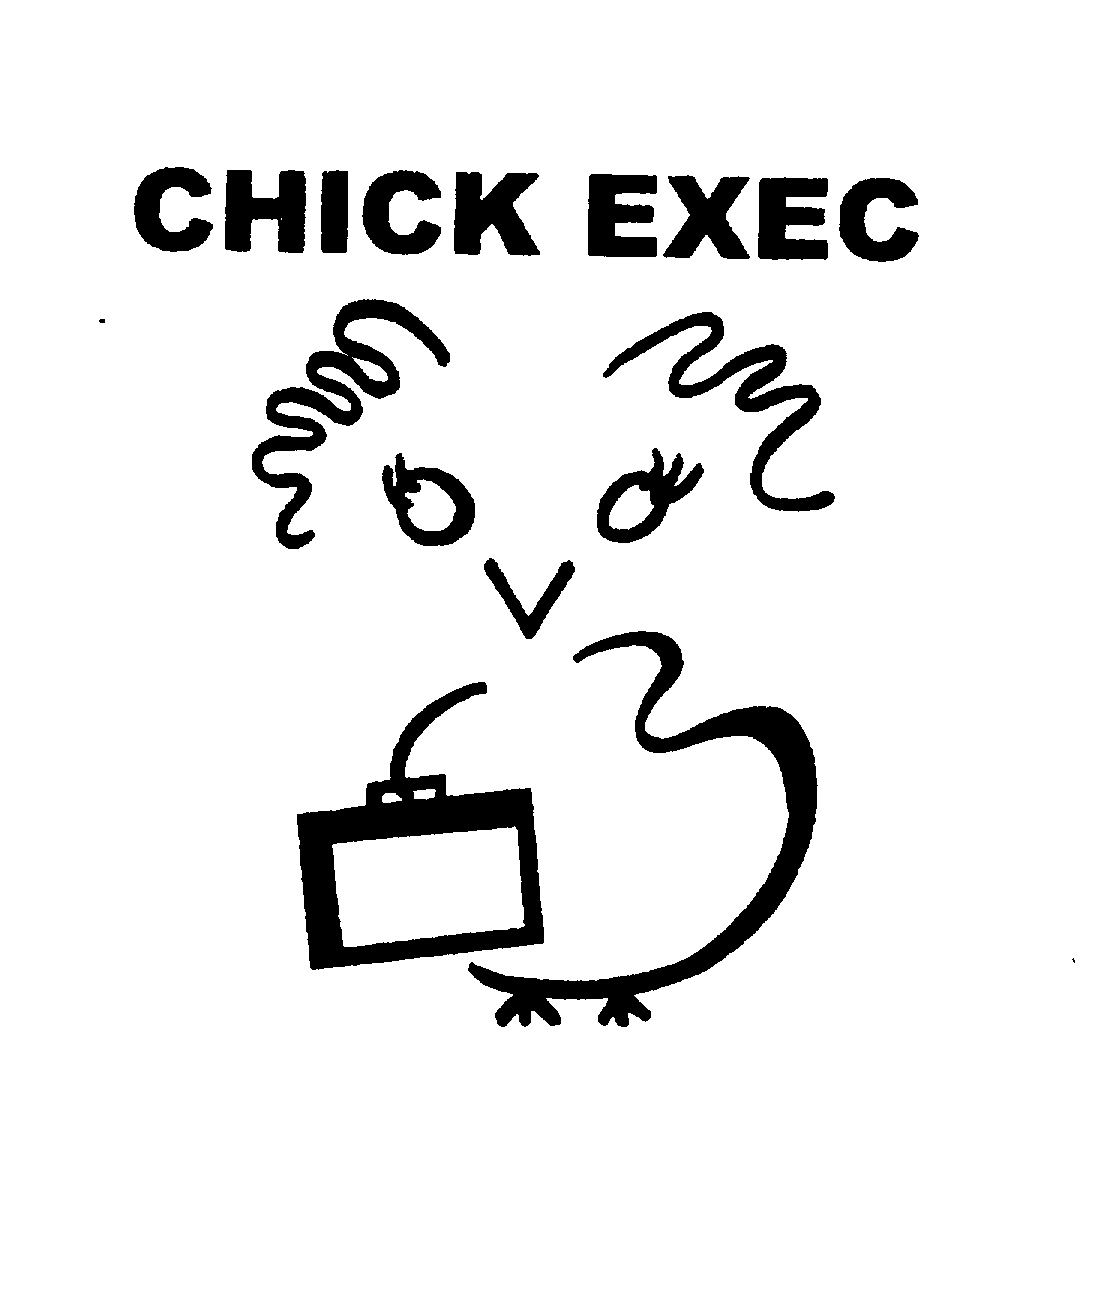  CHICK EXEC